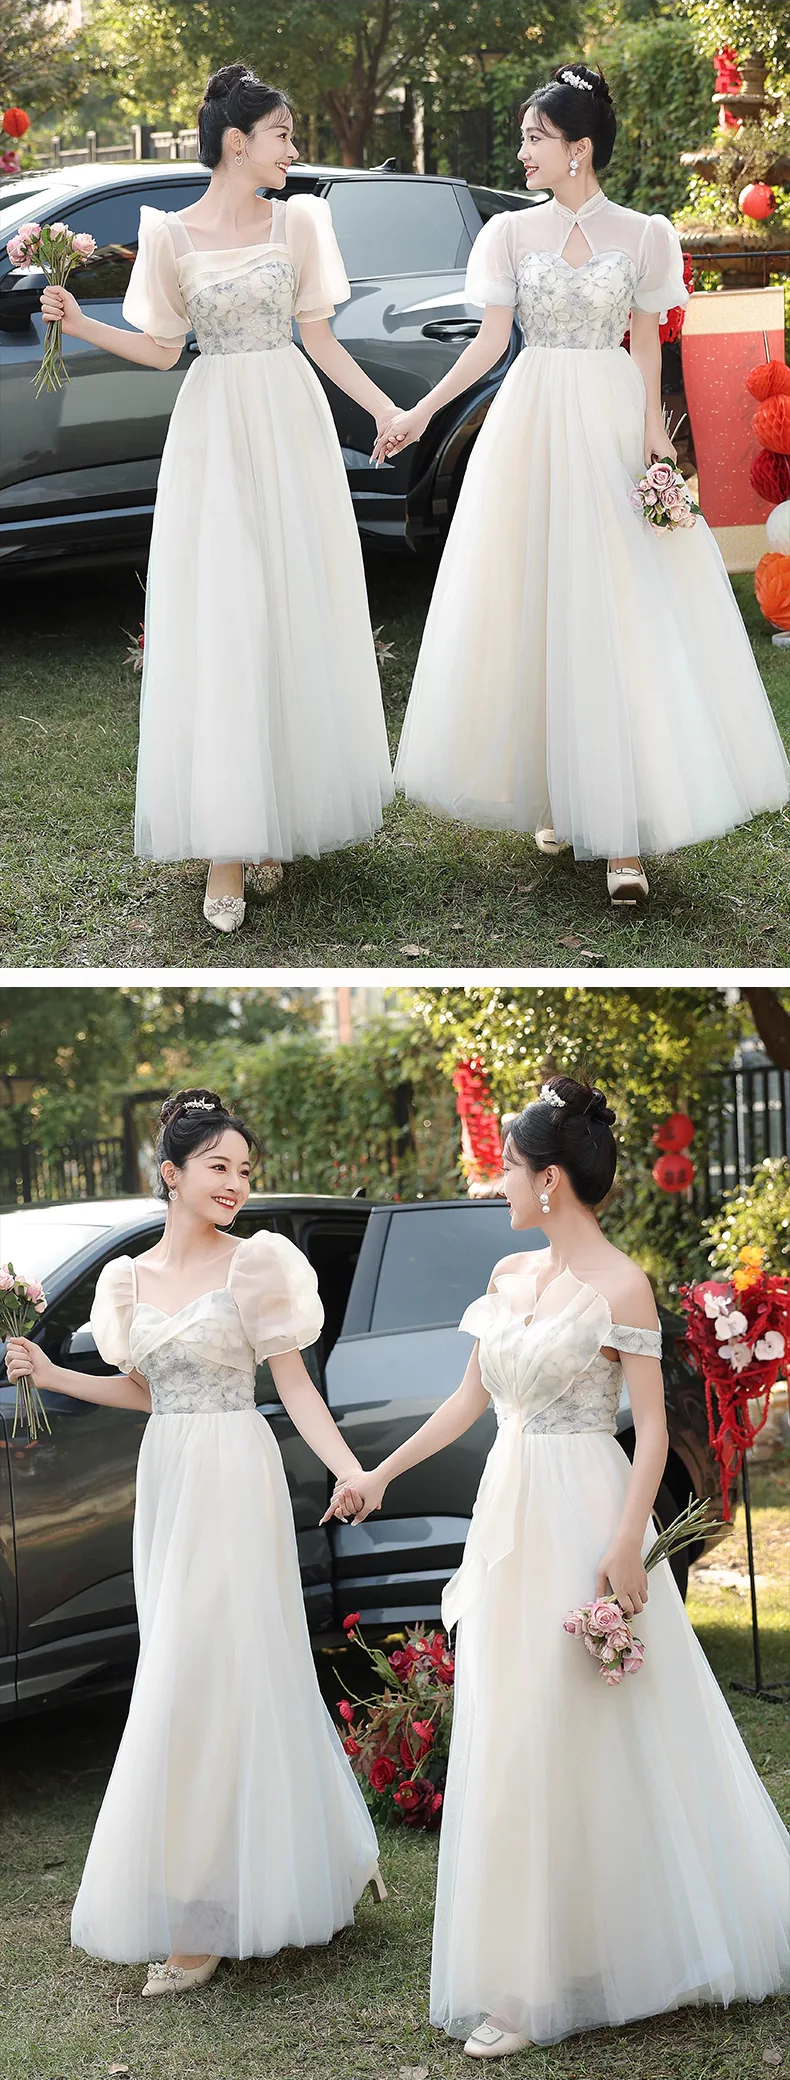 Modest-Short-Sleeve-Floral-Wedding-Guest-Party-Bridesmaid-Long-Dress13